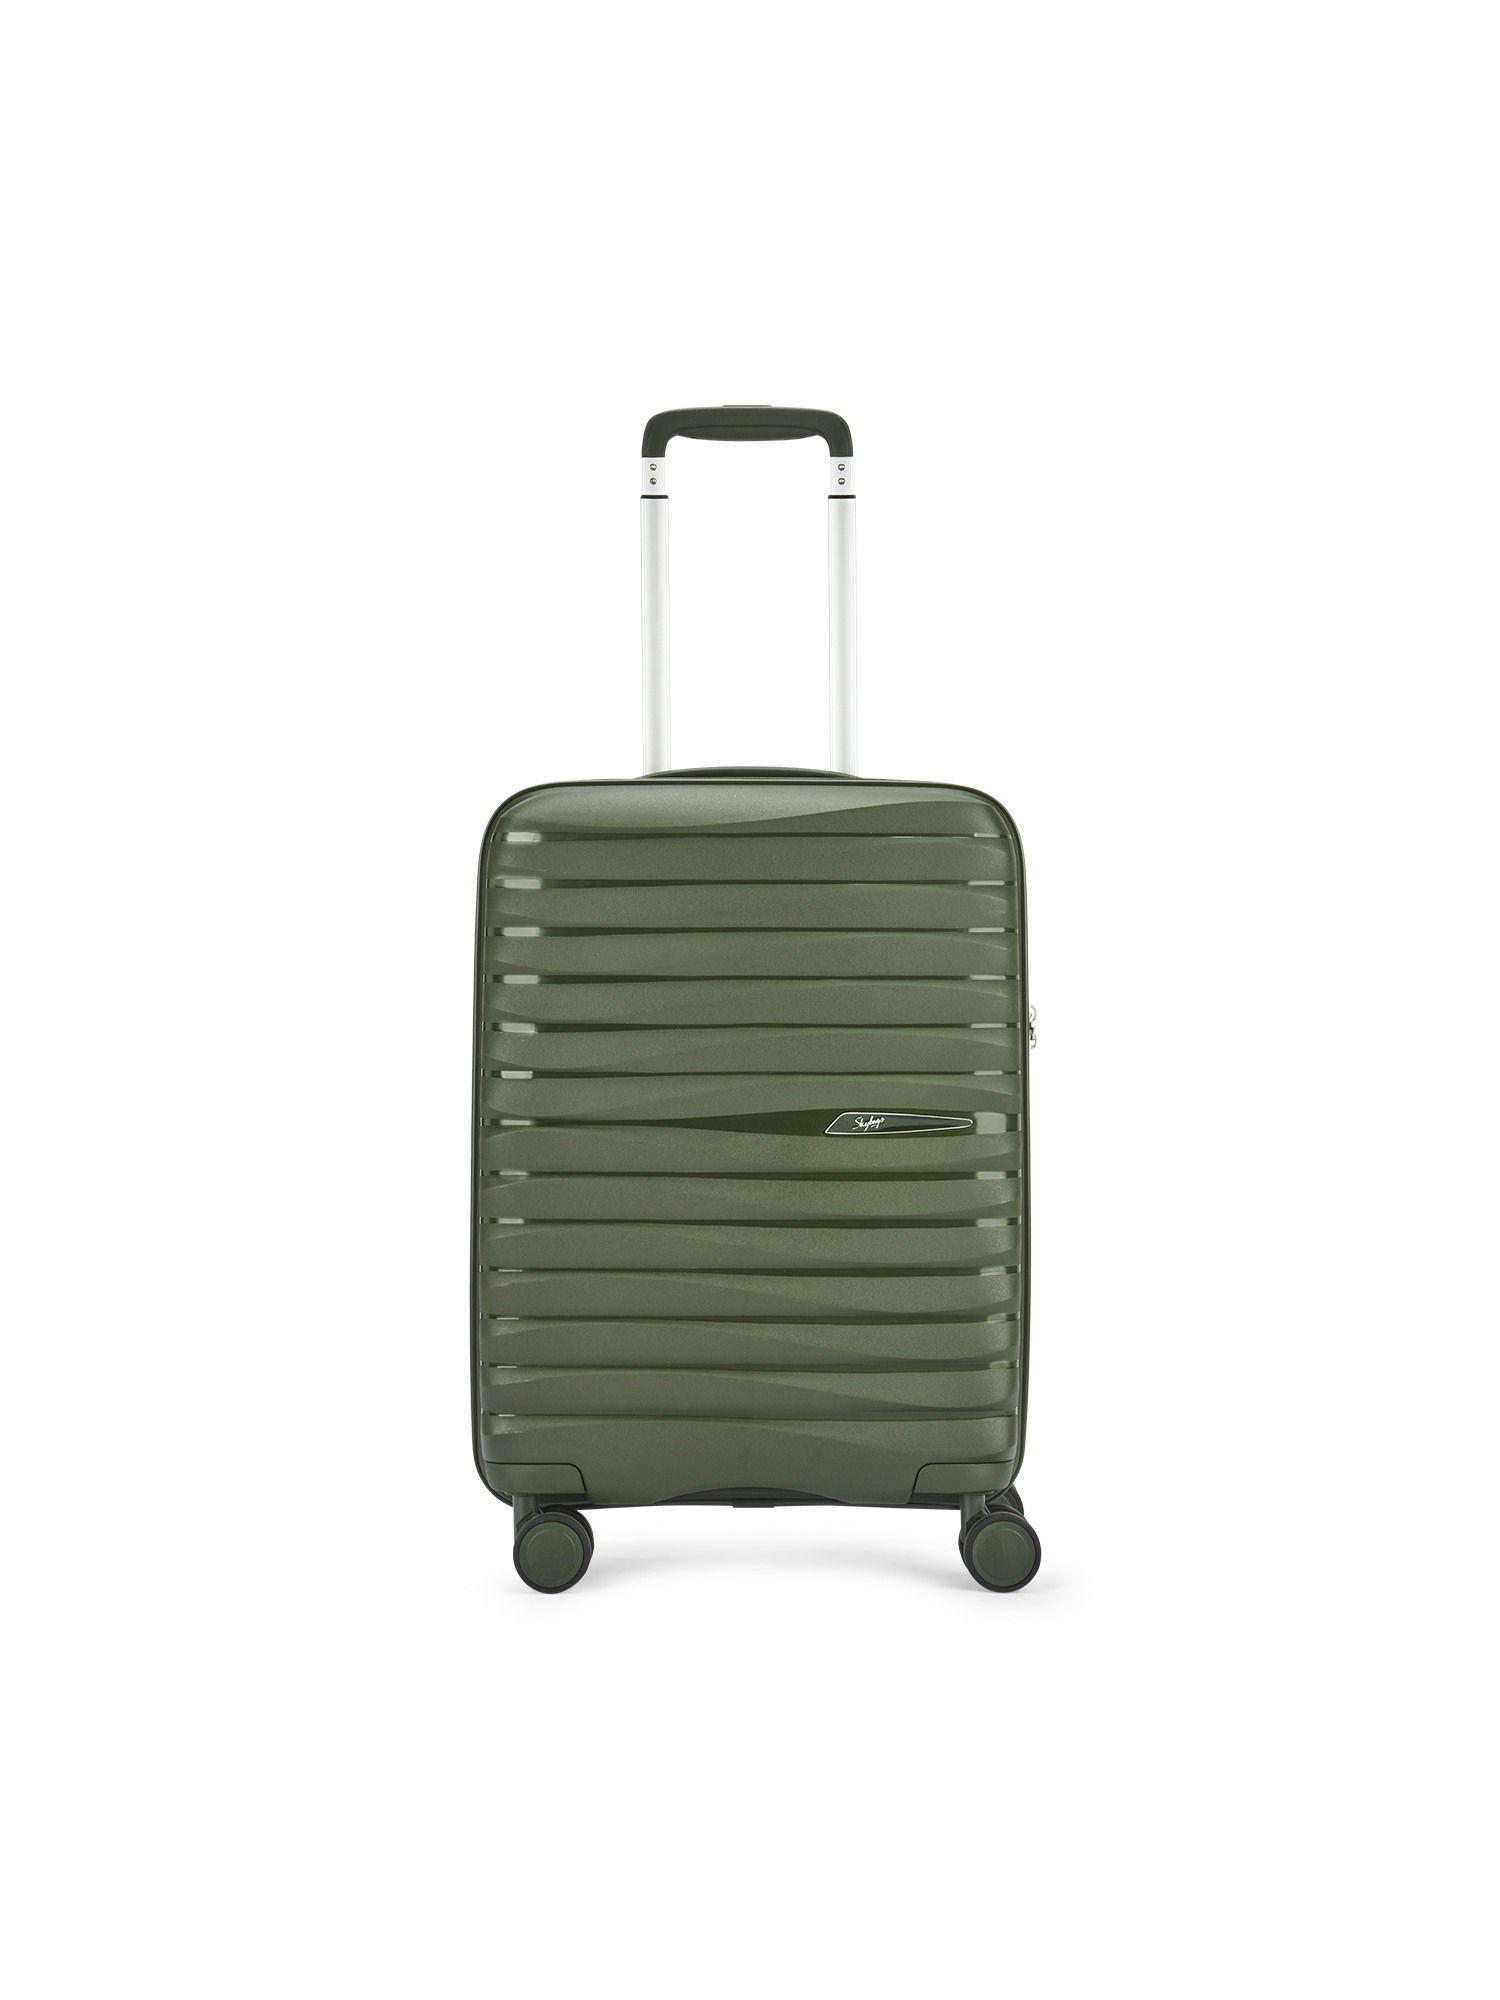 flot green hard luggage 8-wheel suitcase cabin trolley bags